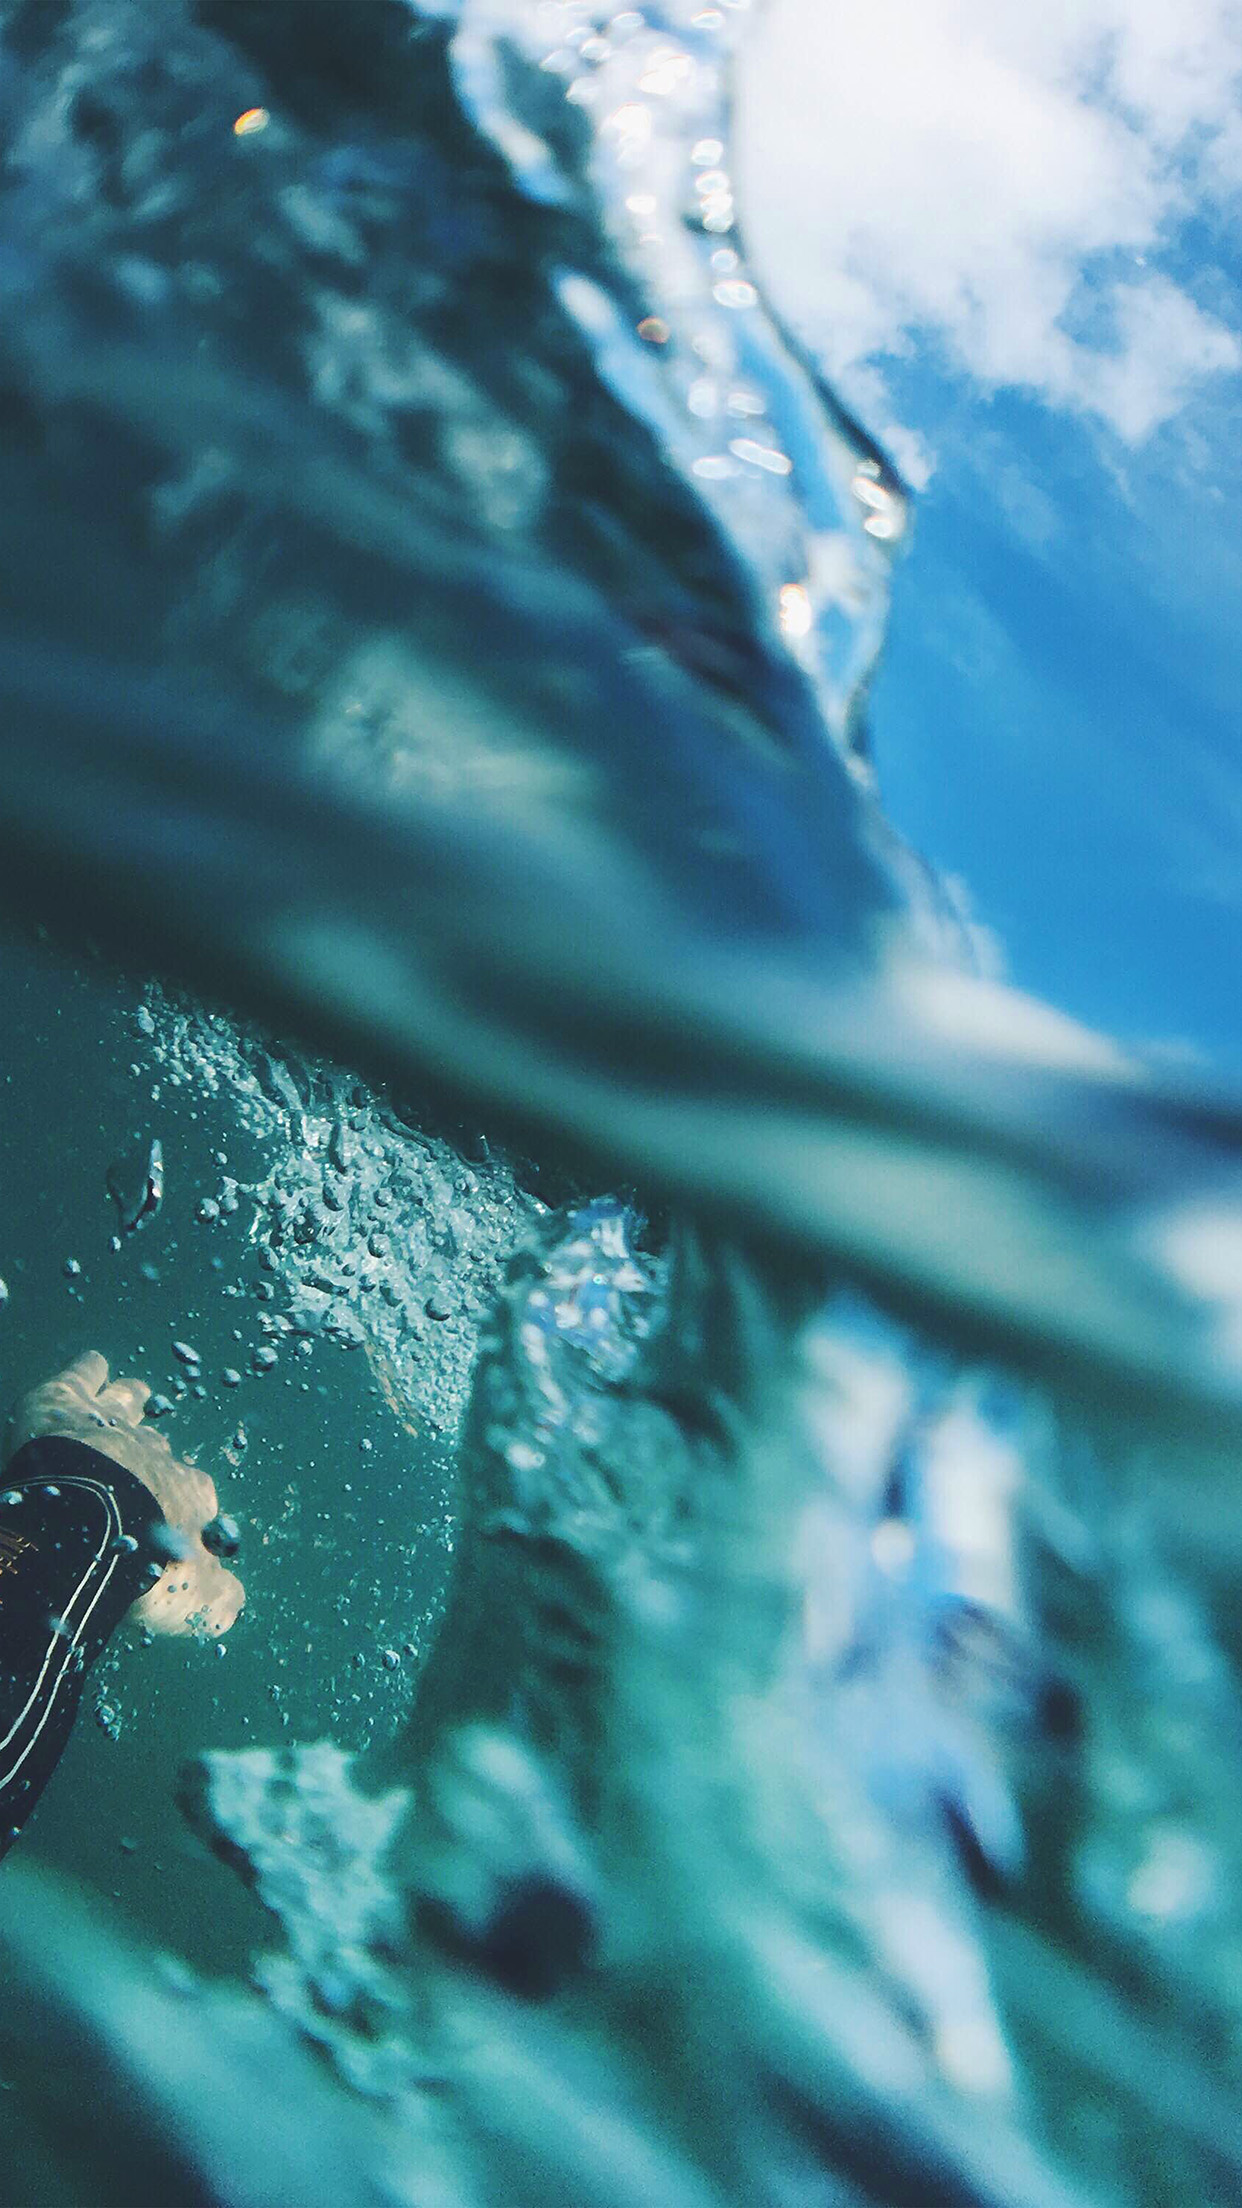 iPhone X wallpaper. sea blue nature swim underwater summer